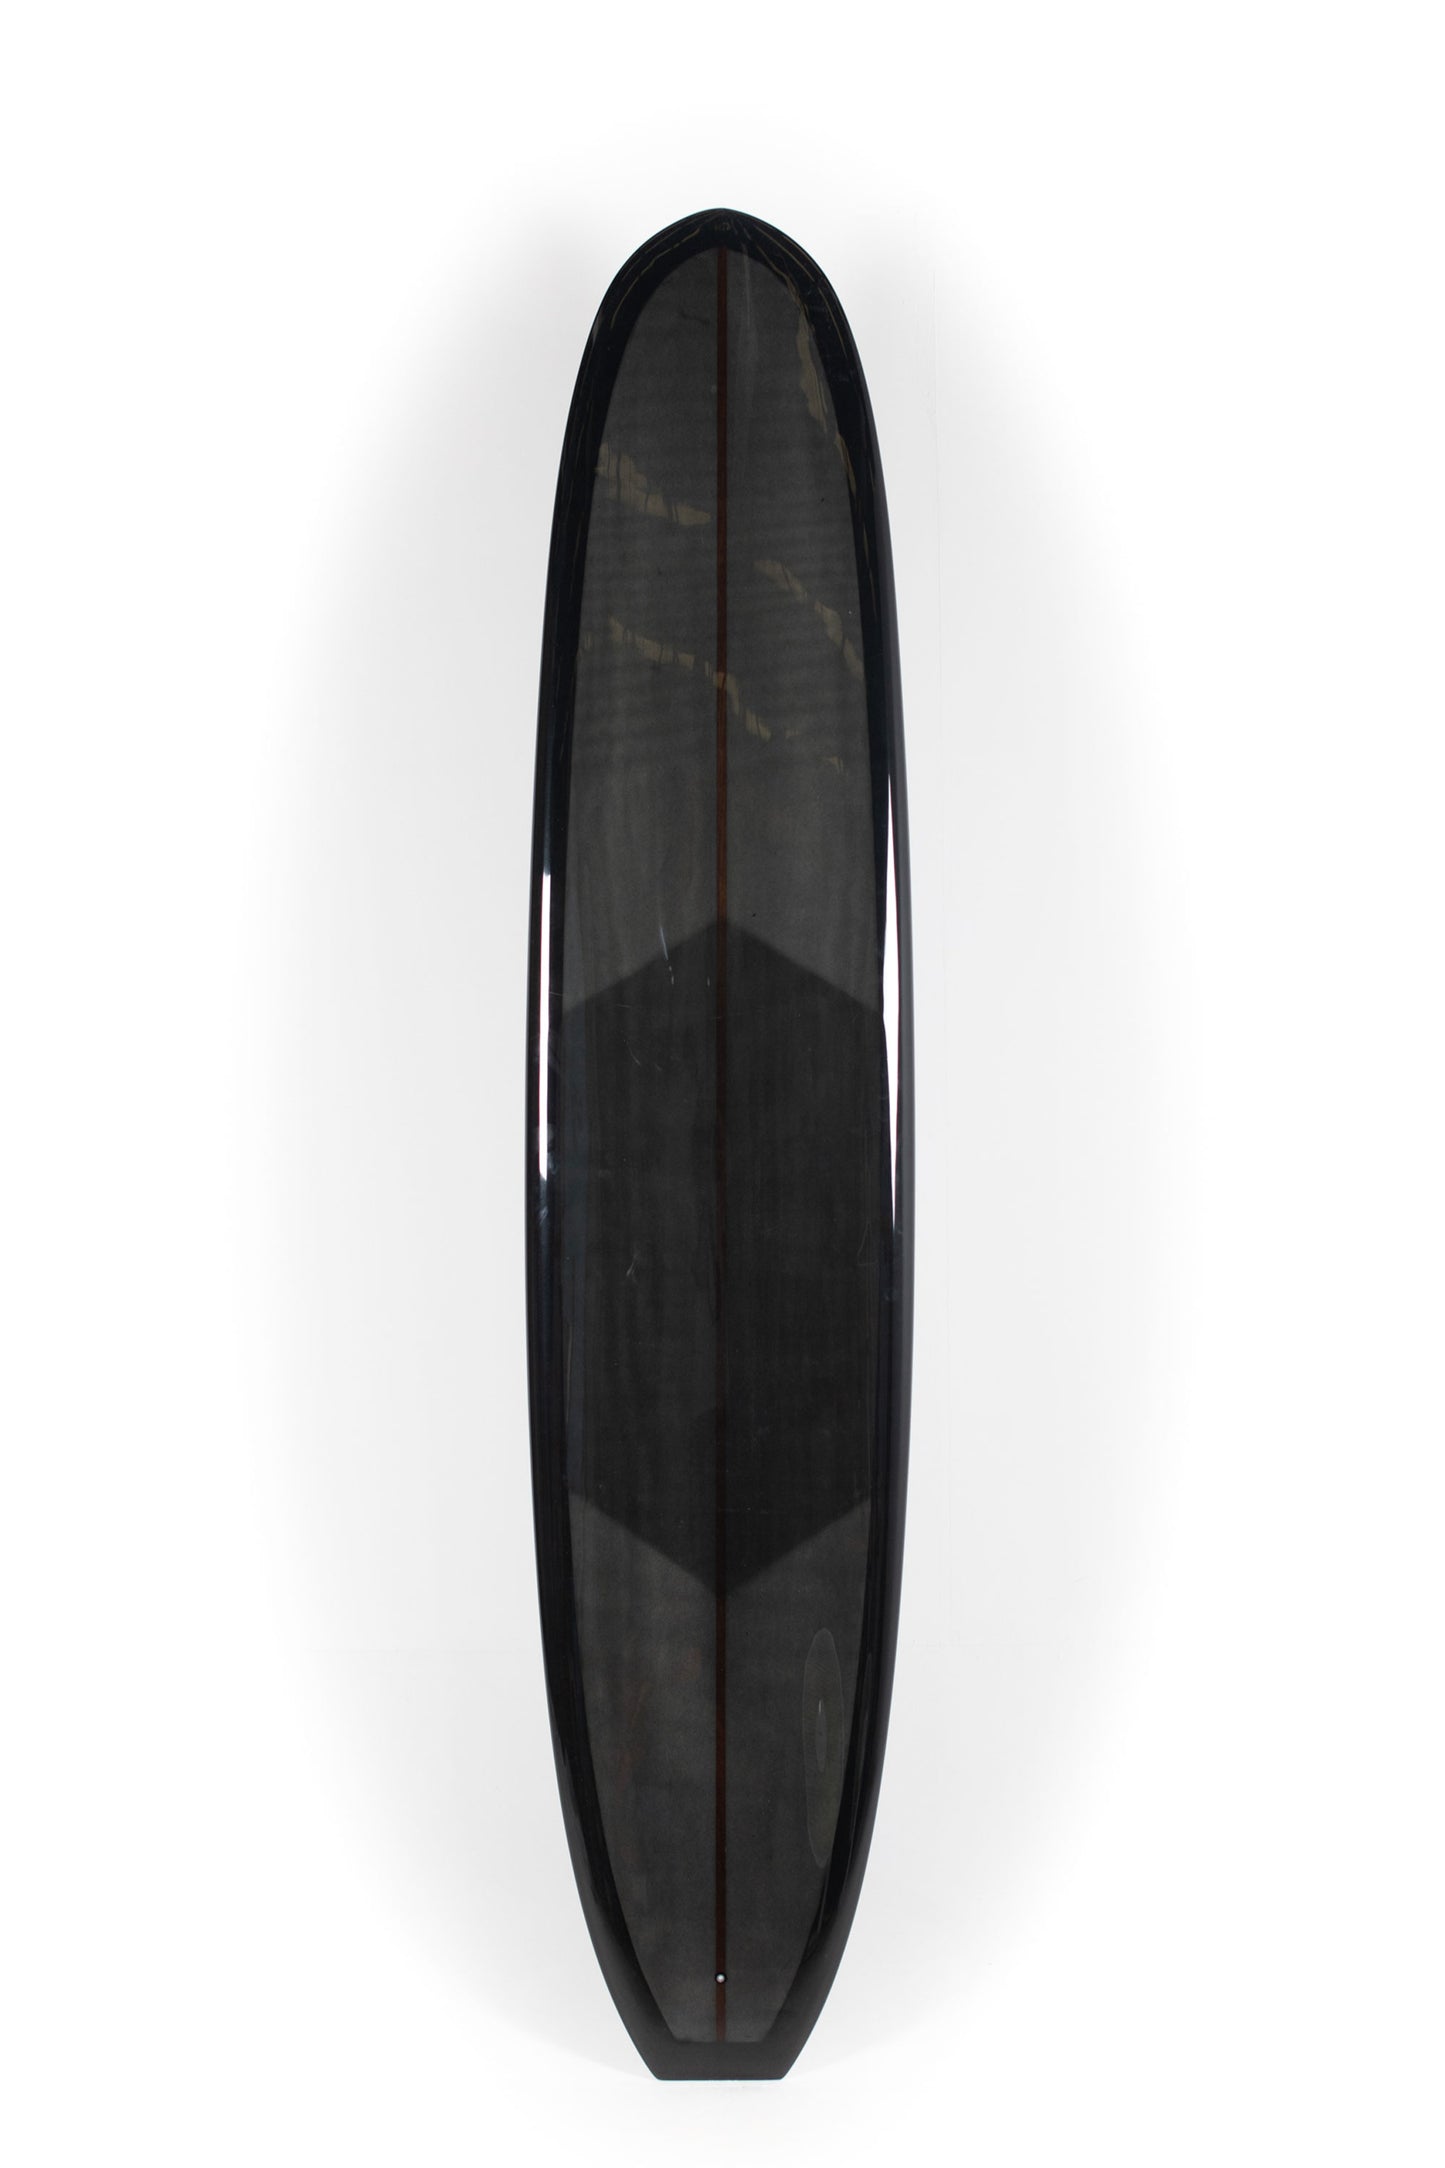 Pukas Surf Shop - Christenson Surfboard  - DEAD SLED by Chris Christenson - 9'0” x 22 1/2 x 2 13/16 - CX03184